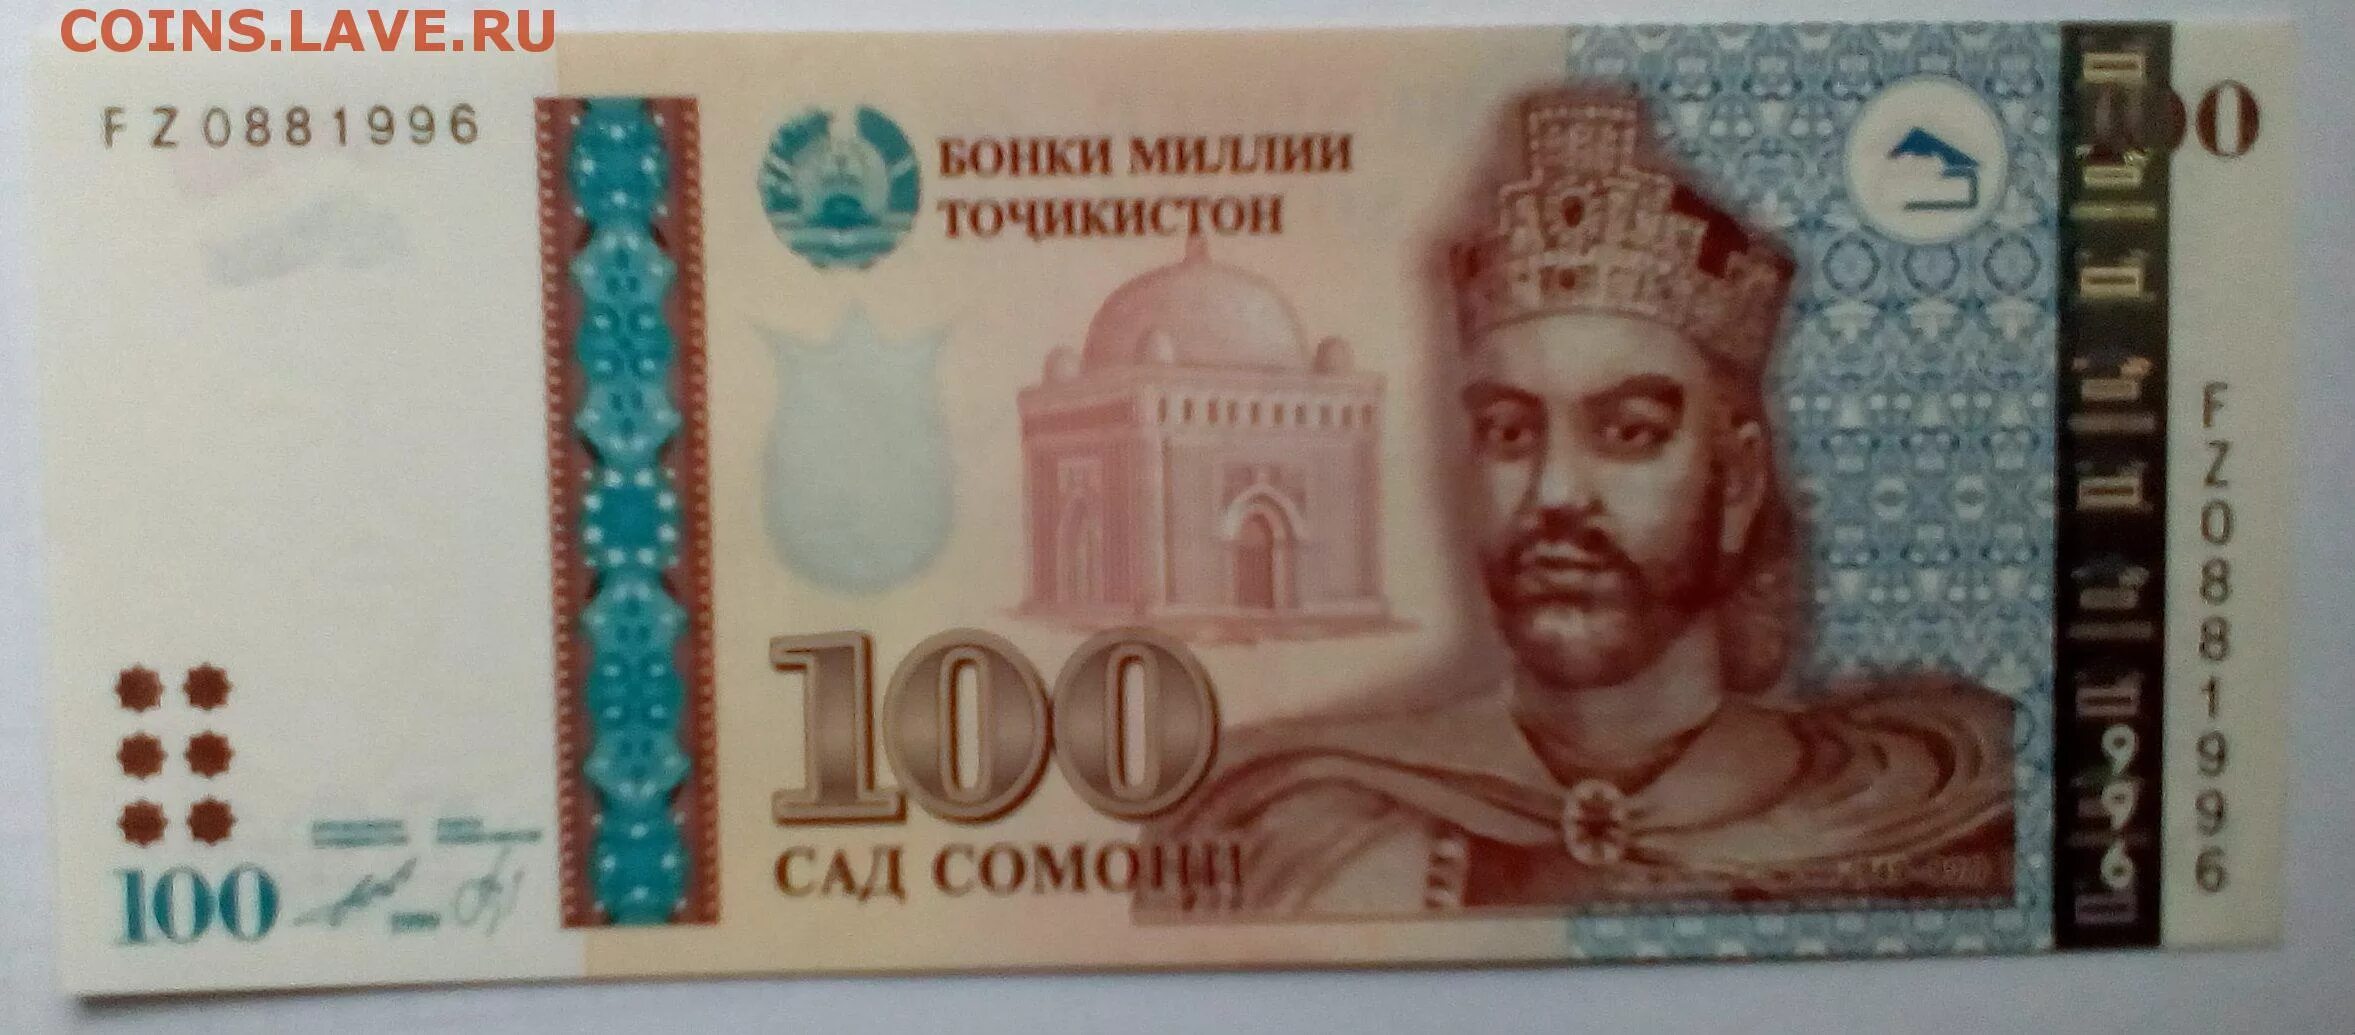 Купюра 100 Сомони. Купюры Таджикистана. Таджикский Сомони. Деньги Сомони. 500000 в таджикских сомони